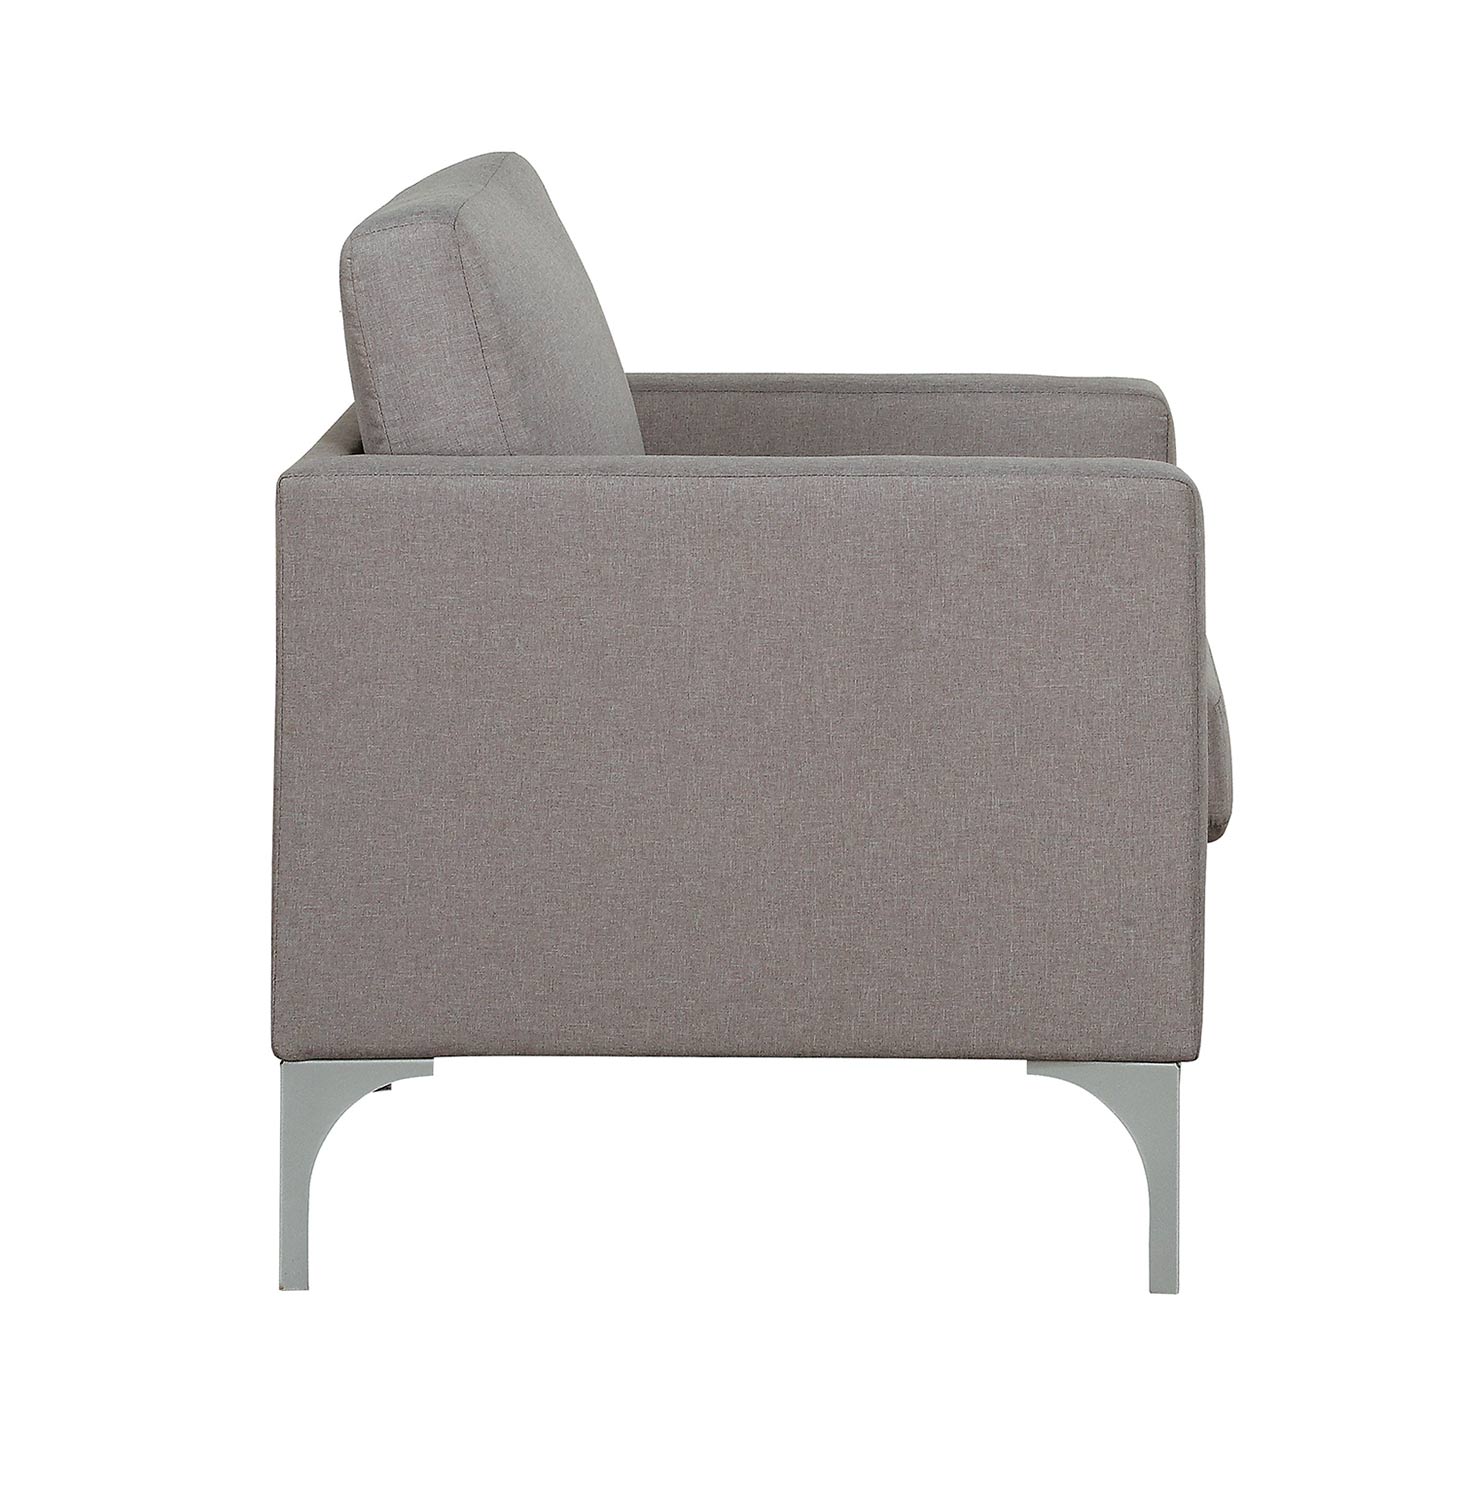 Homelegance Soho Chair - Brownish Gray